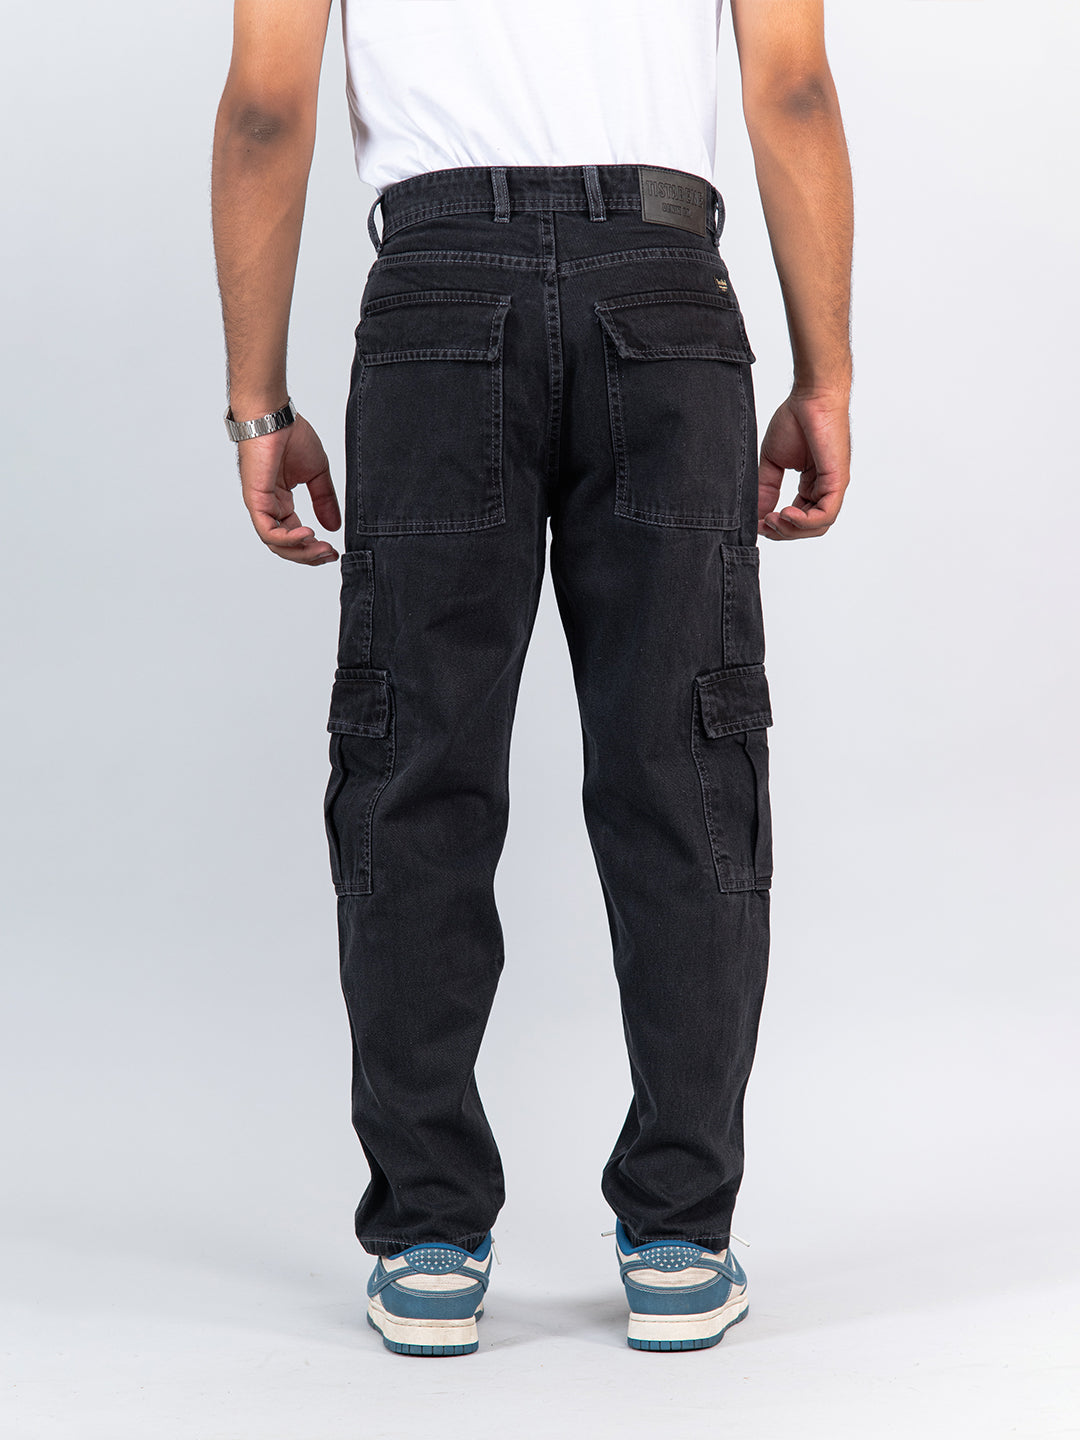 Summer Men's Casual Pants Trousers Slim Fit Work Elastic Waist Light  Trousers | eBay